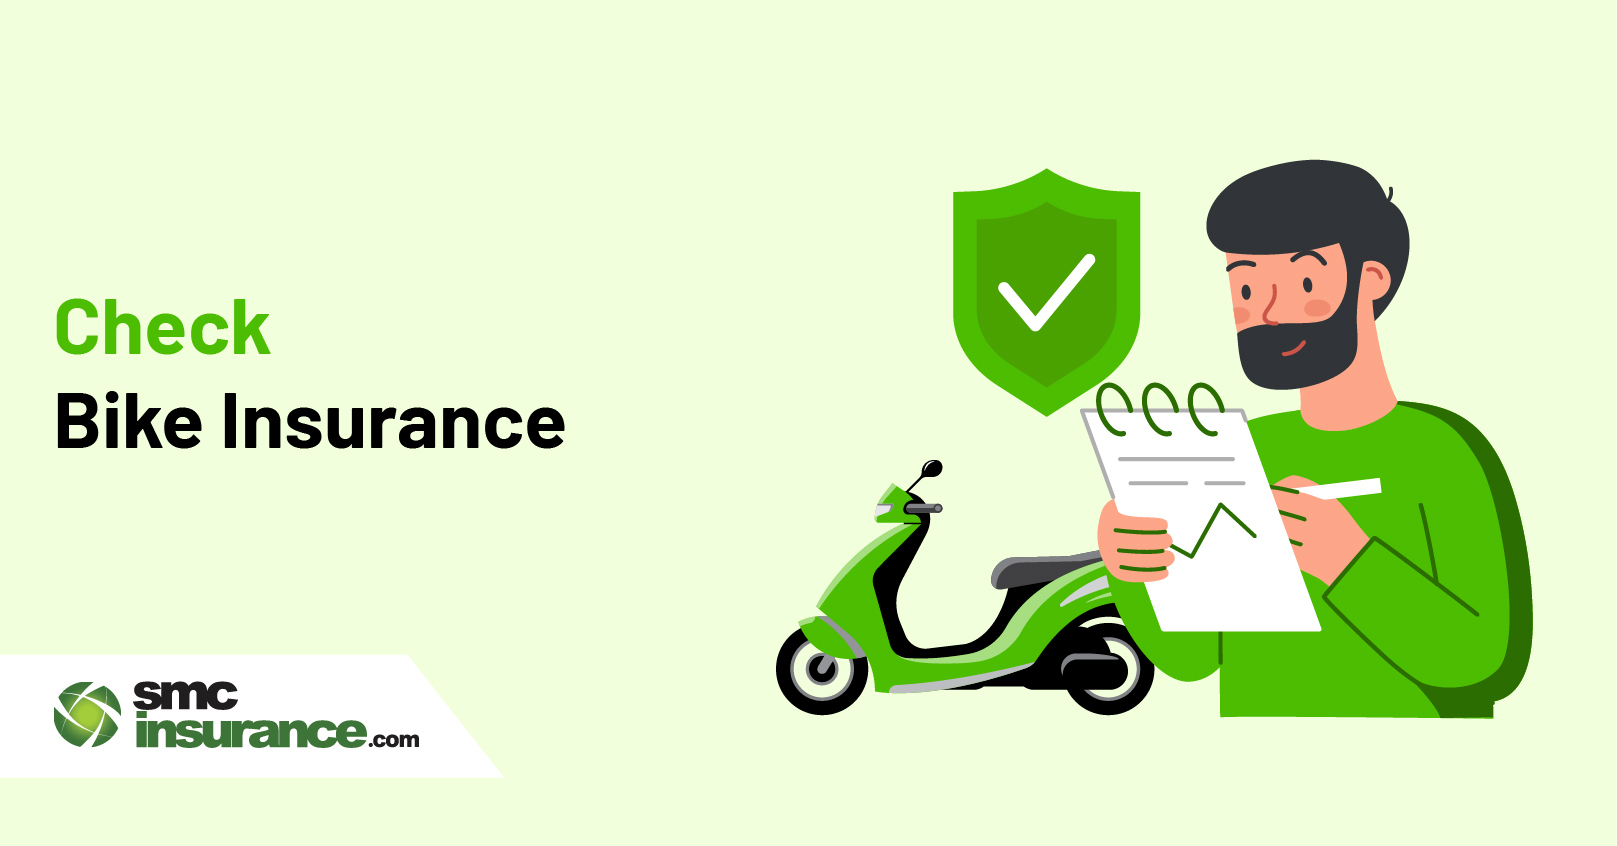 Check Bike Insurance